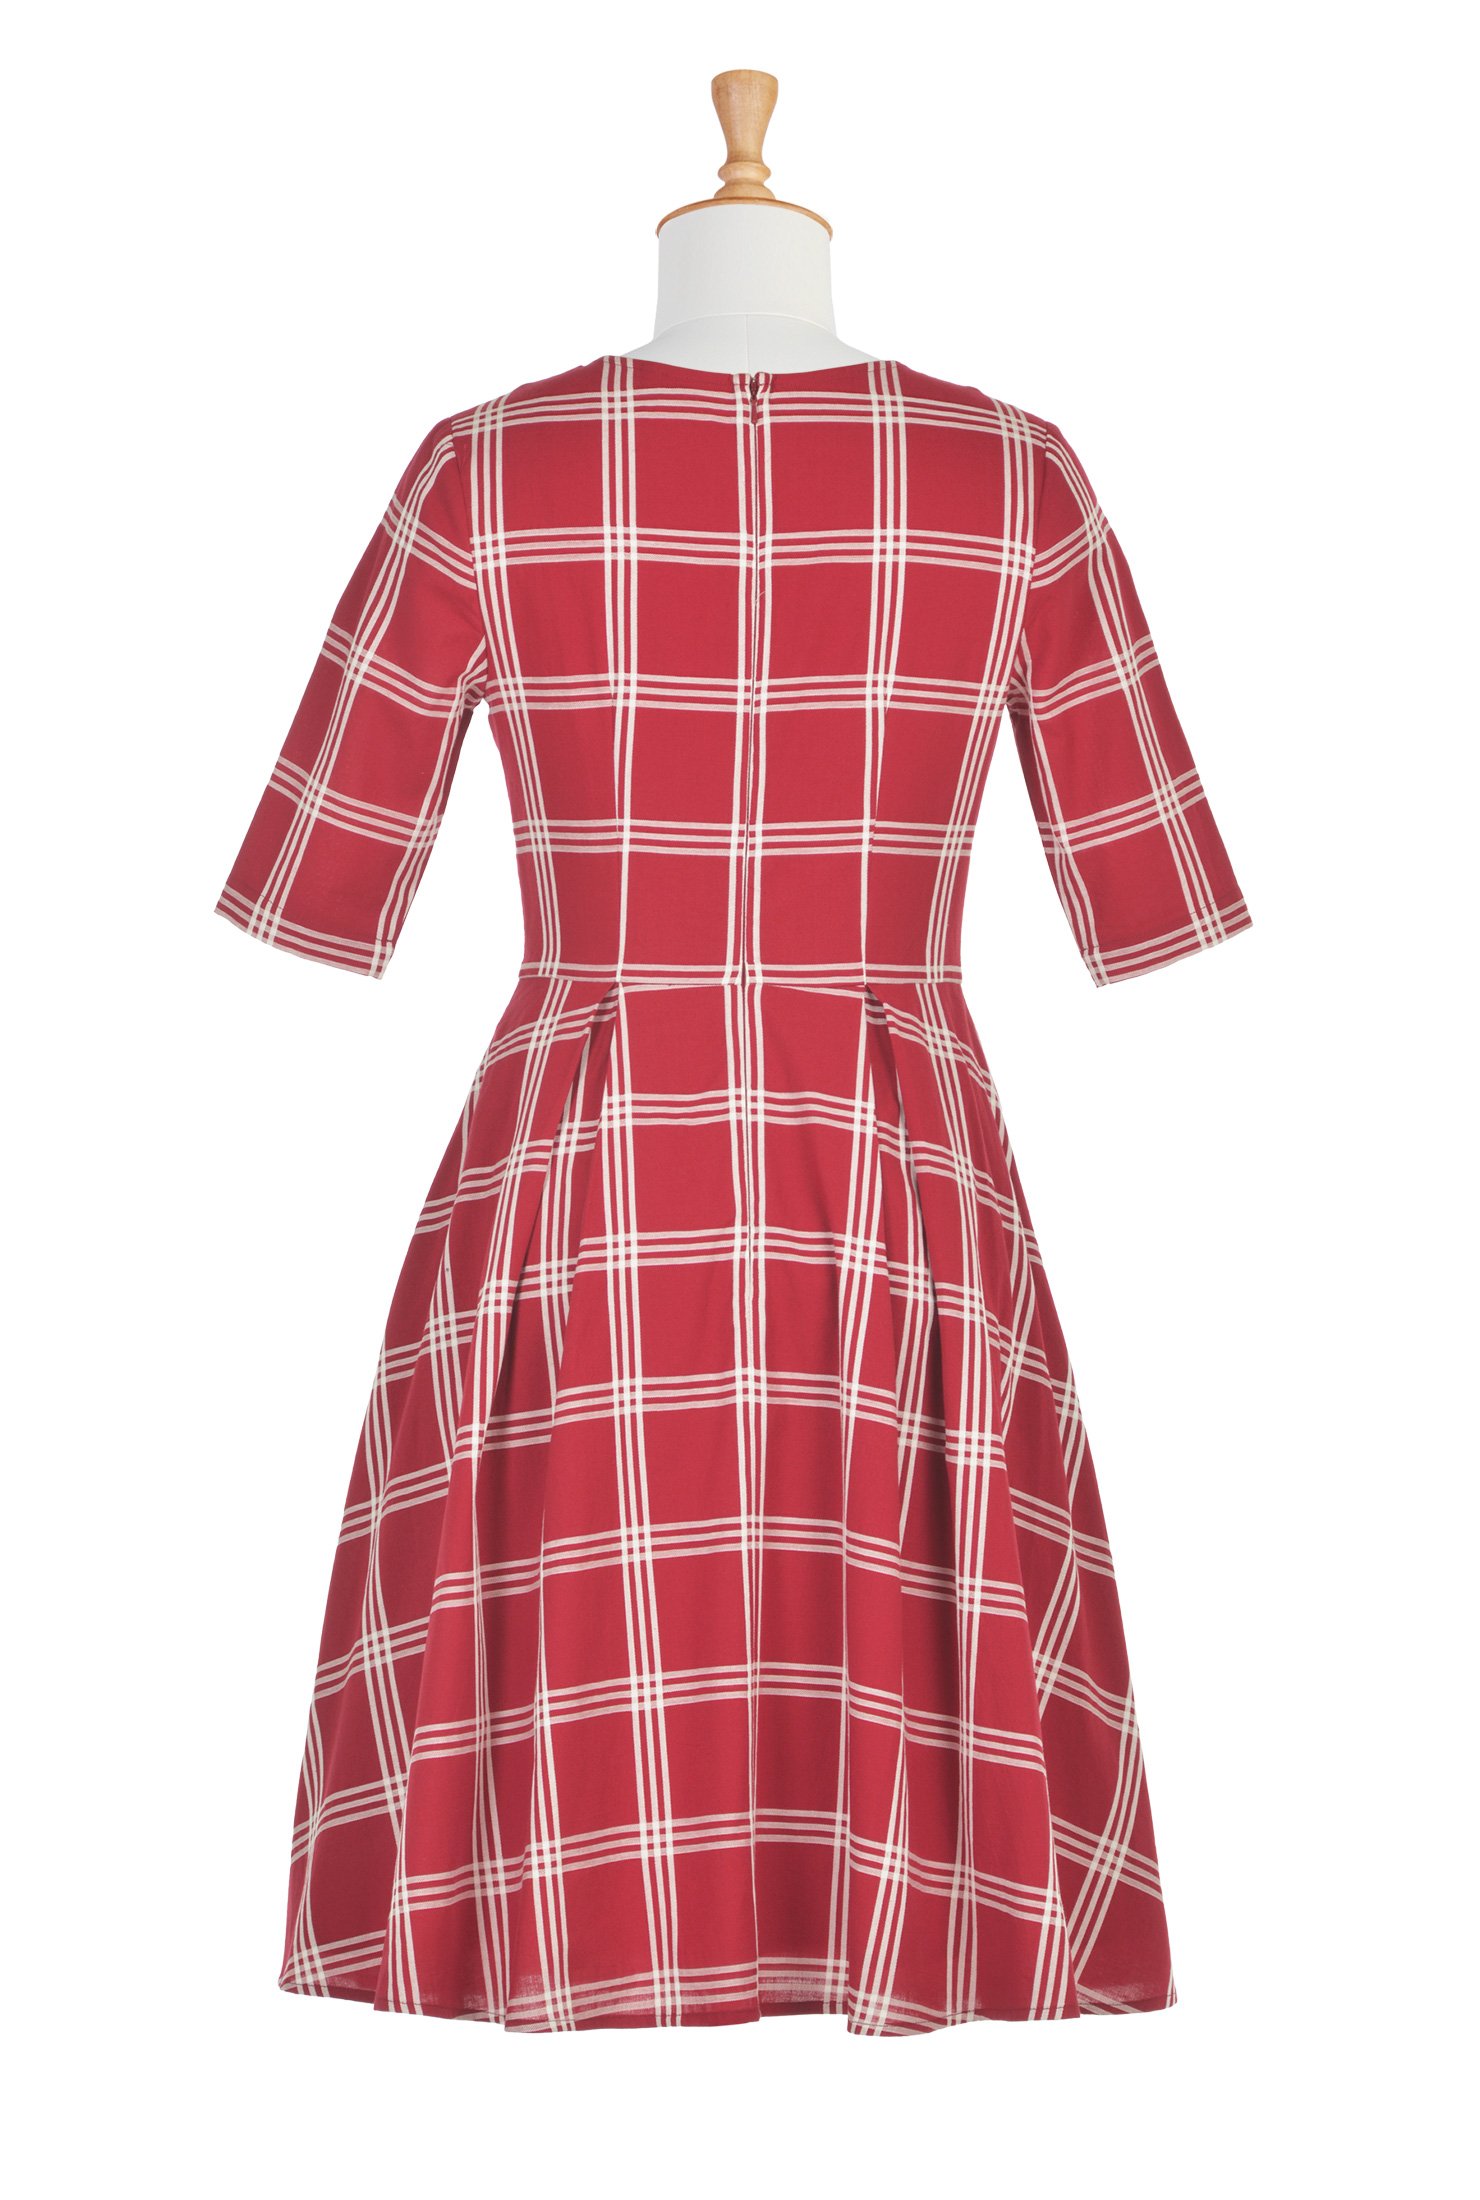 Shop Windowpane check buttoned A-line dress | eShakti